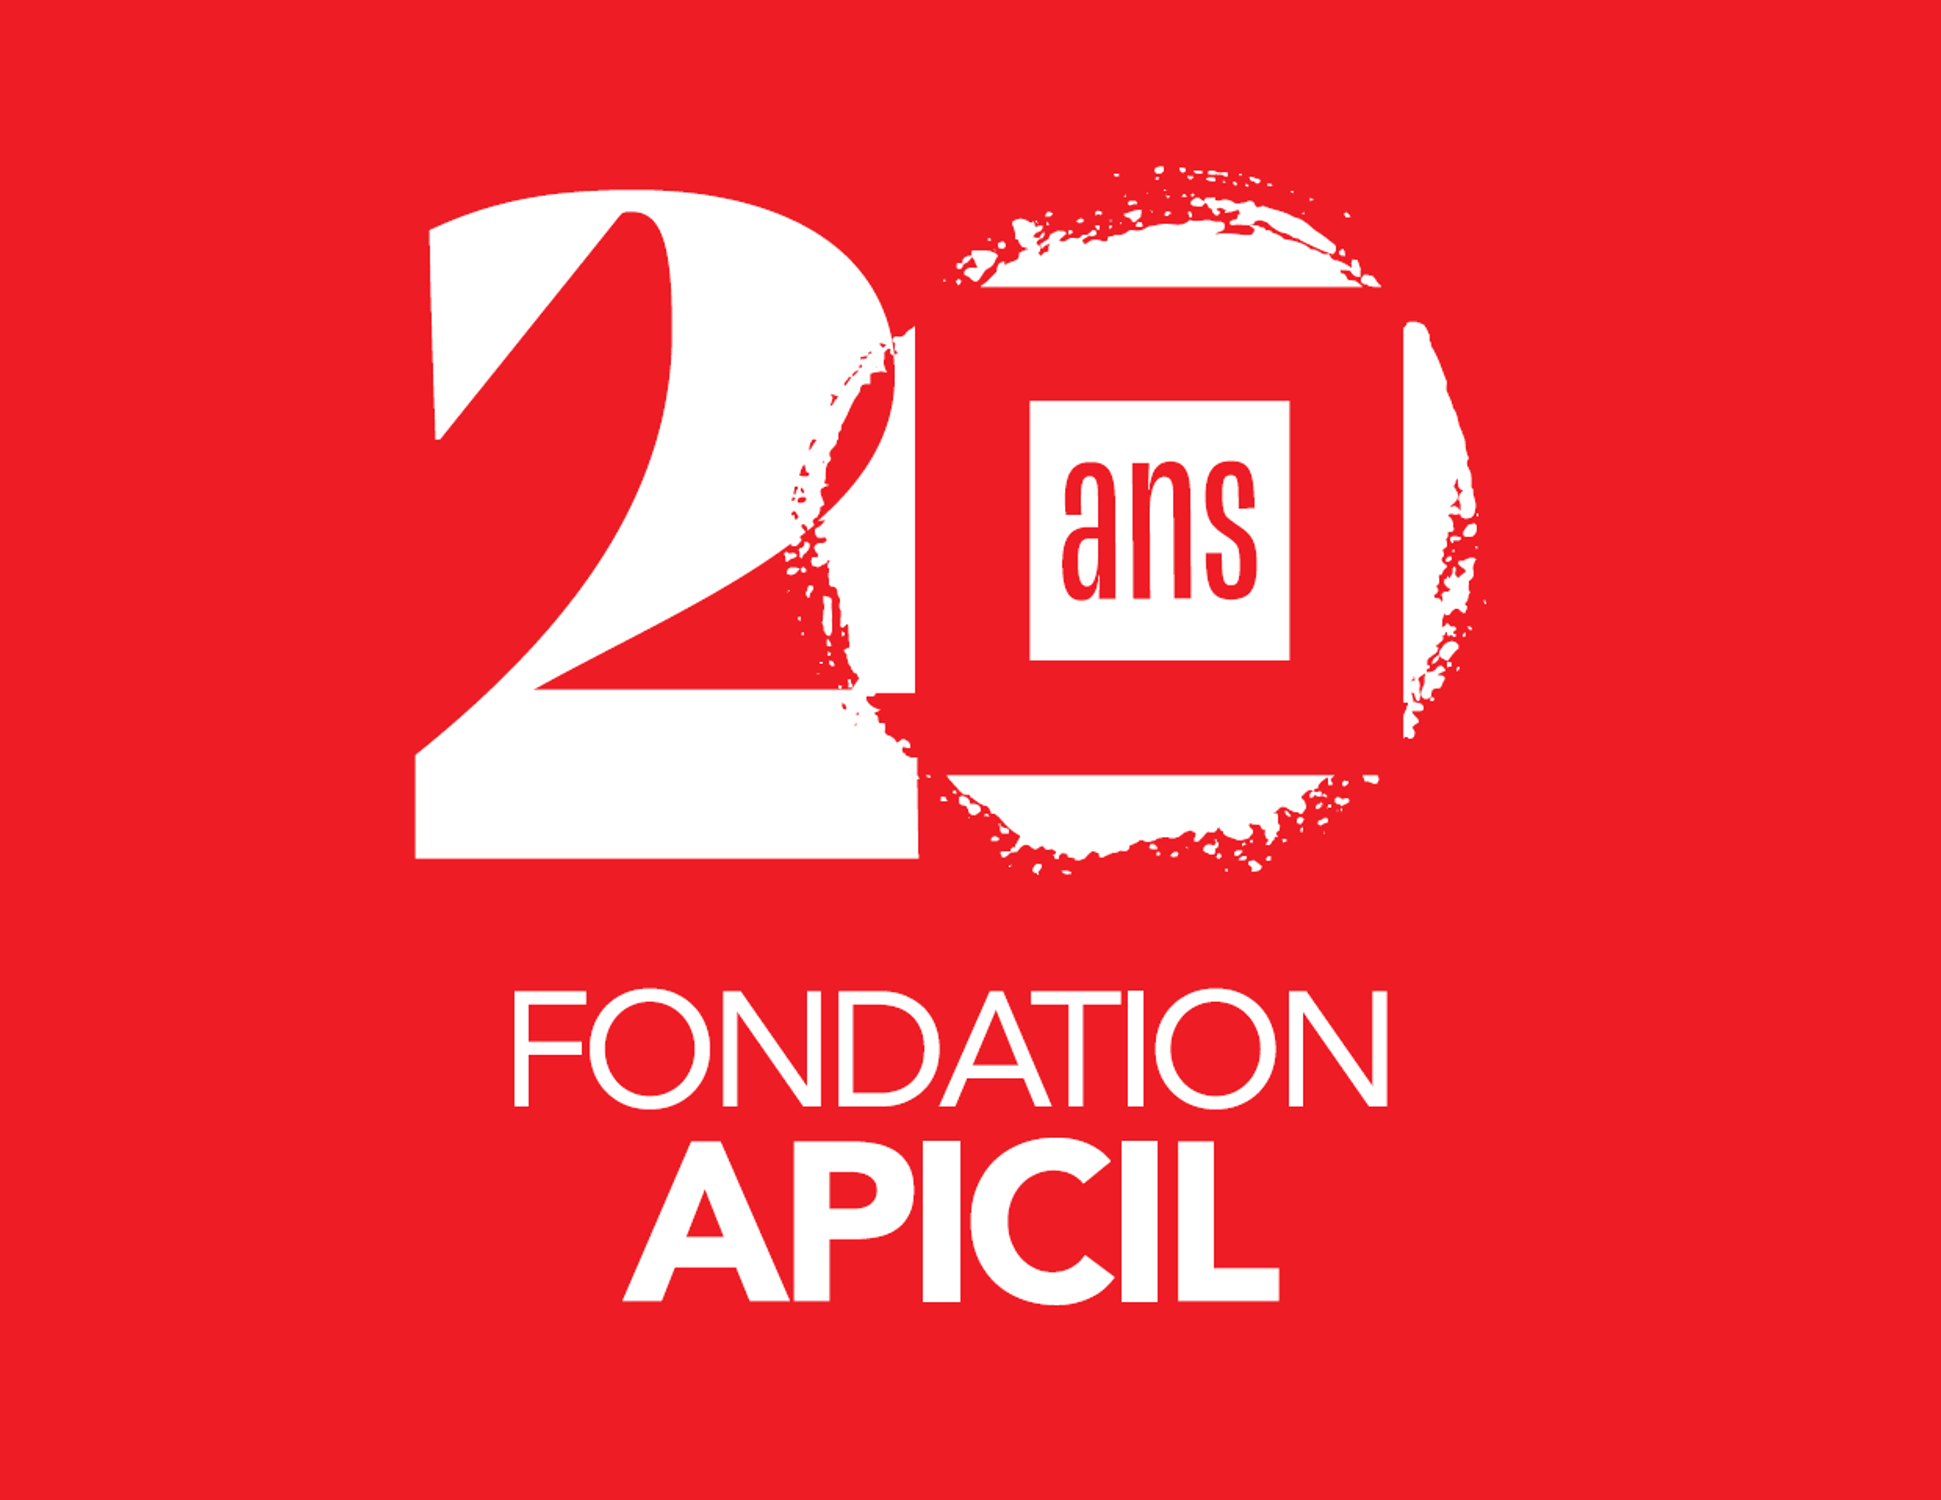 Fondation APICIL